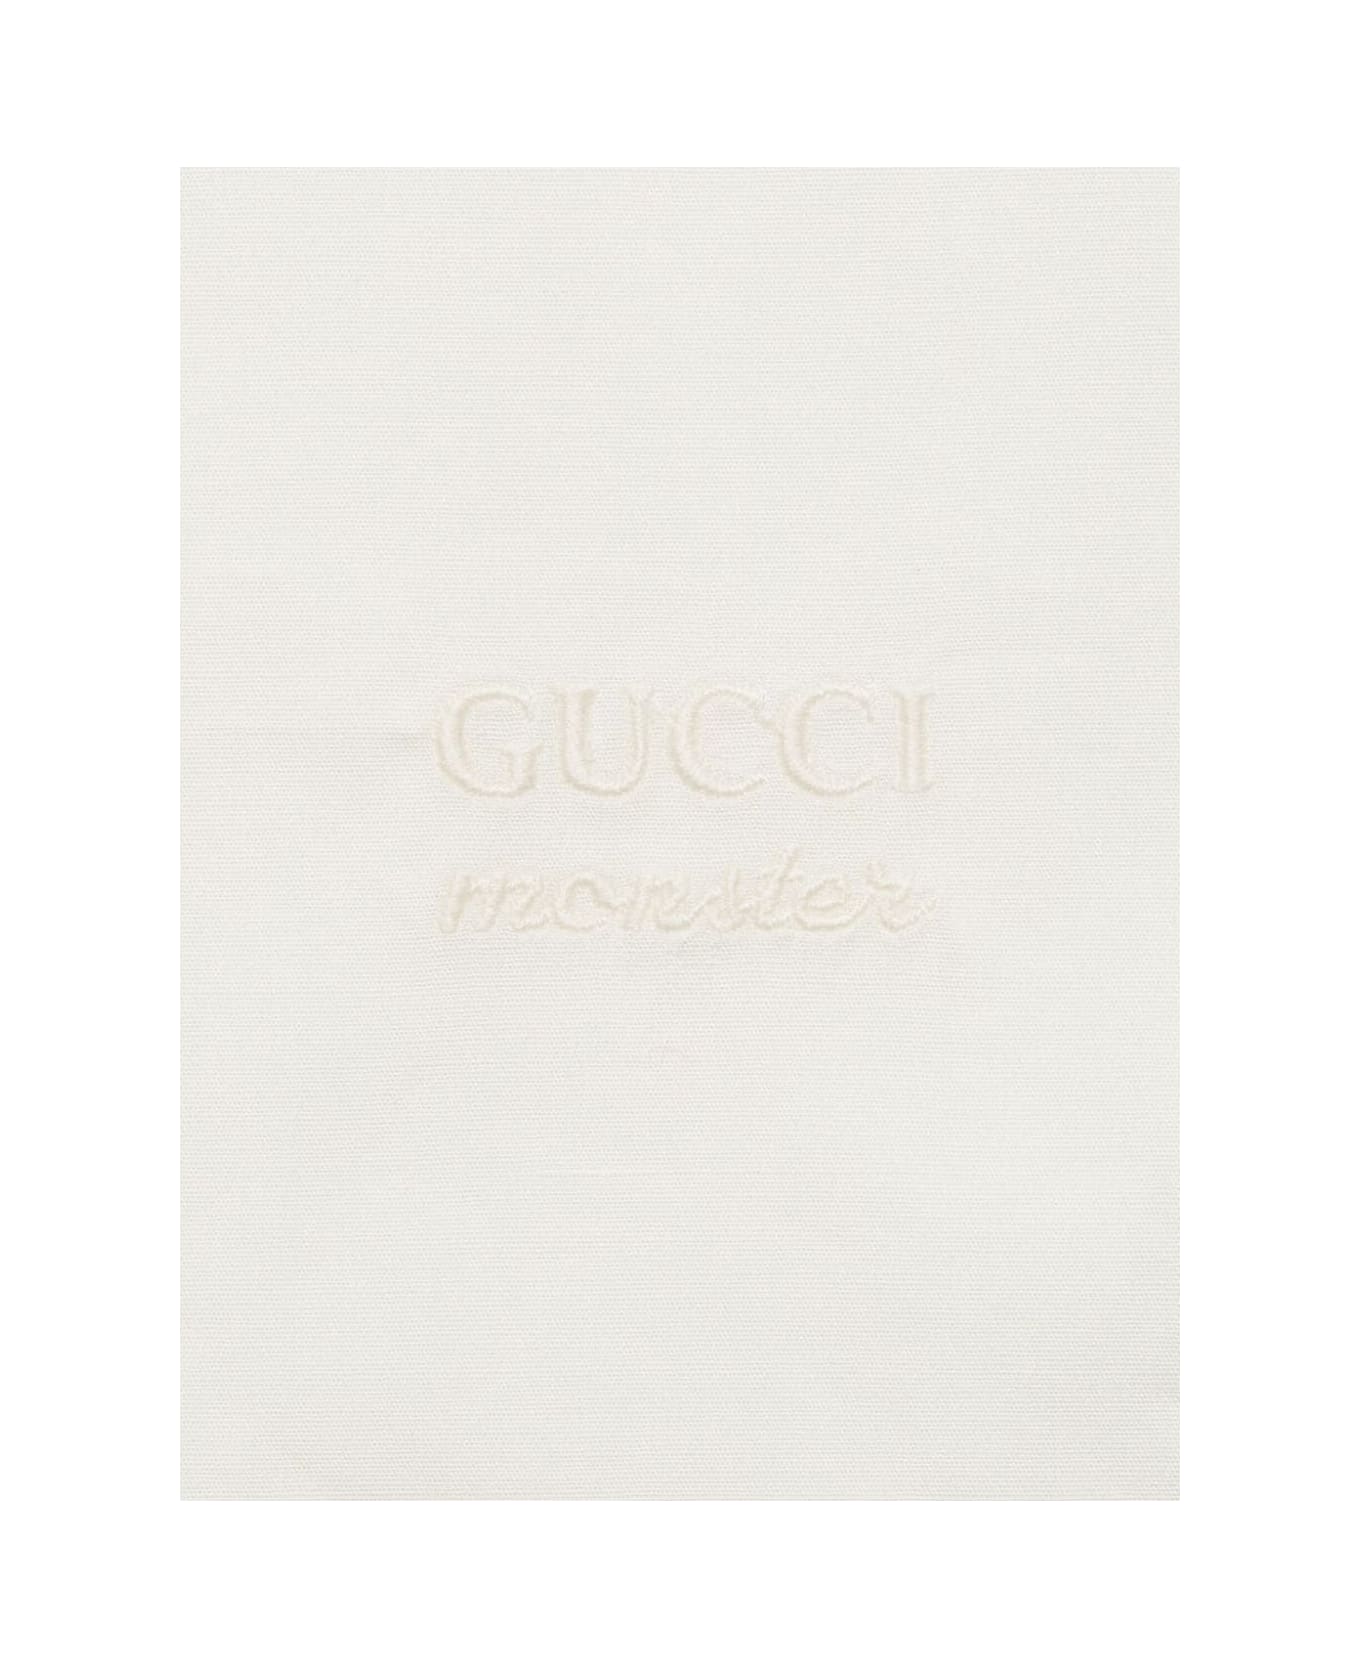 Gucci Shirt Stretch Cotton Popeline - Soft White